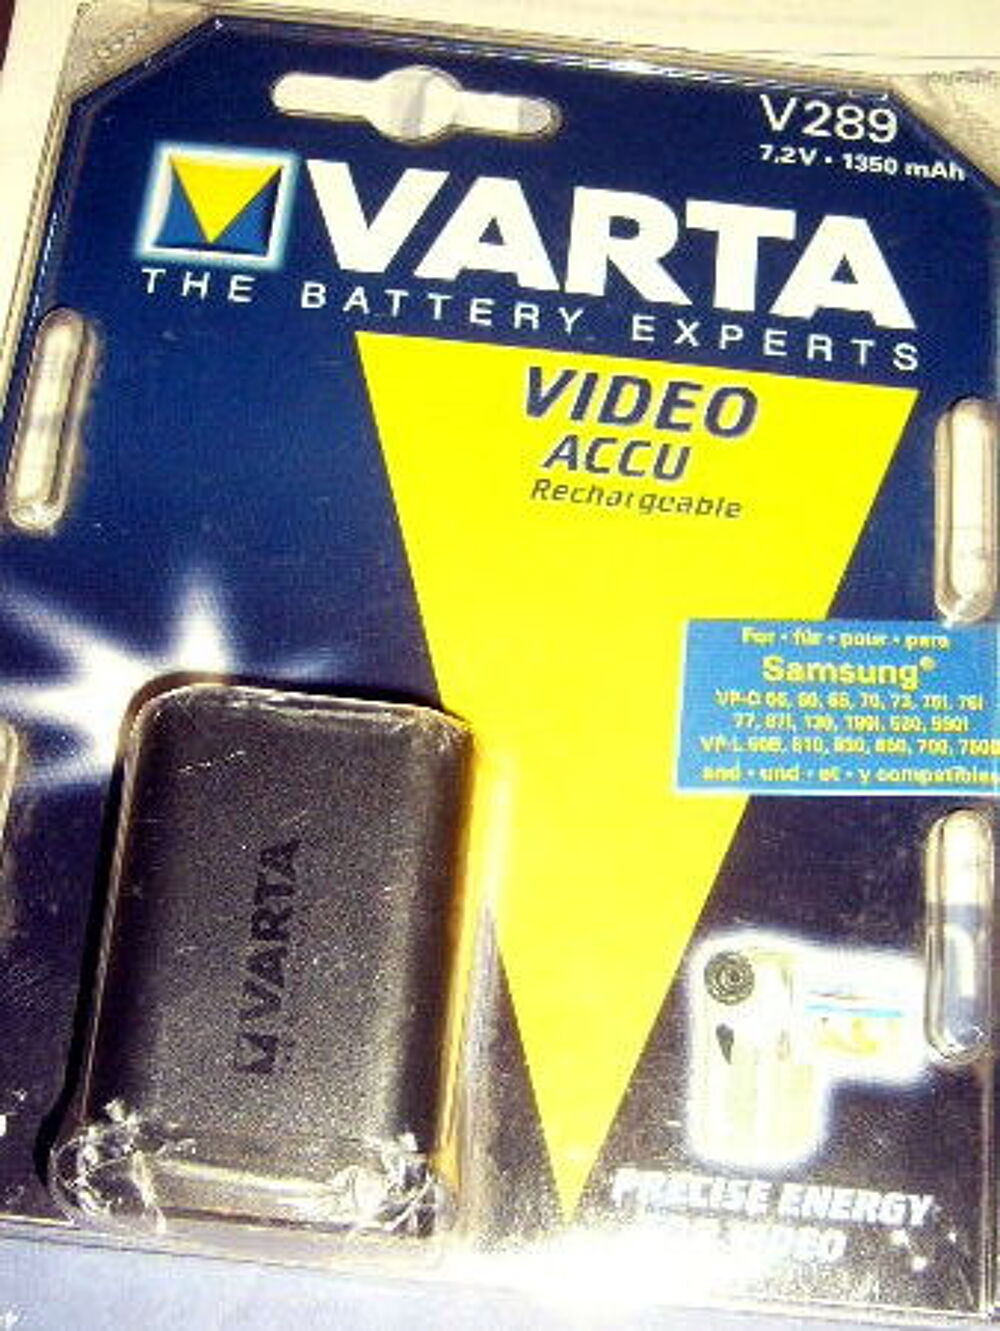 batterie varta V289 neuvecamescope samsung VP-D55 
Photos/Video/TV